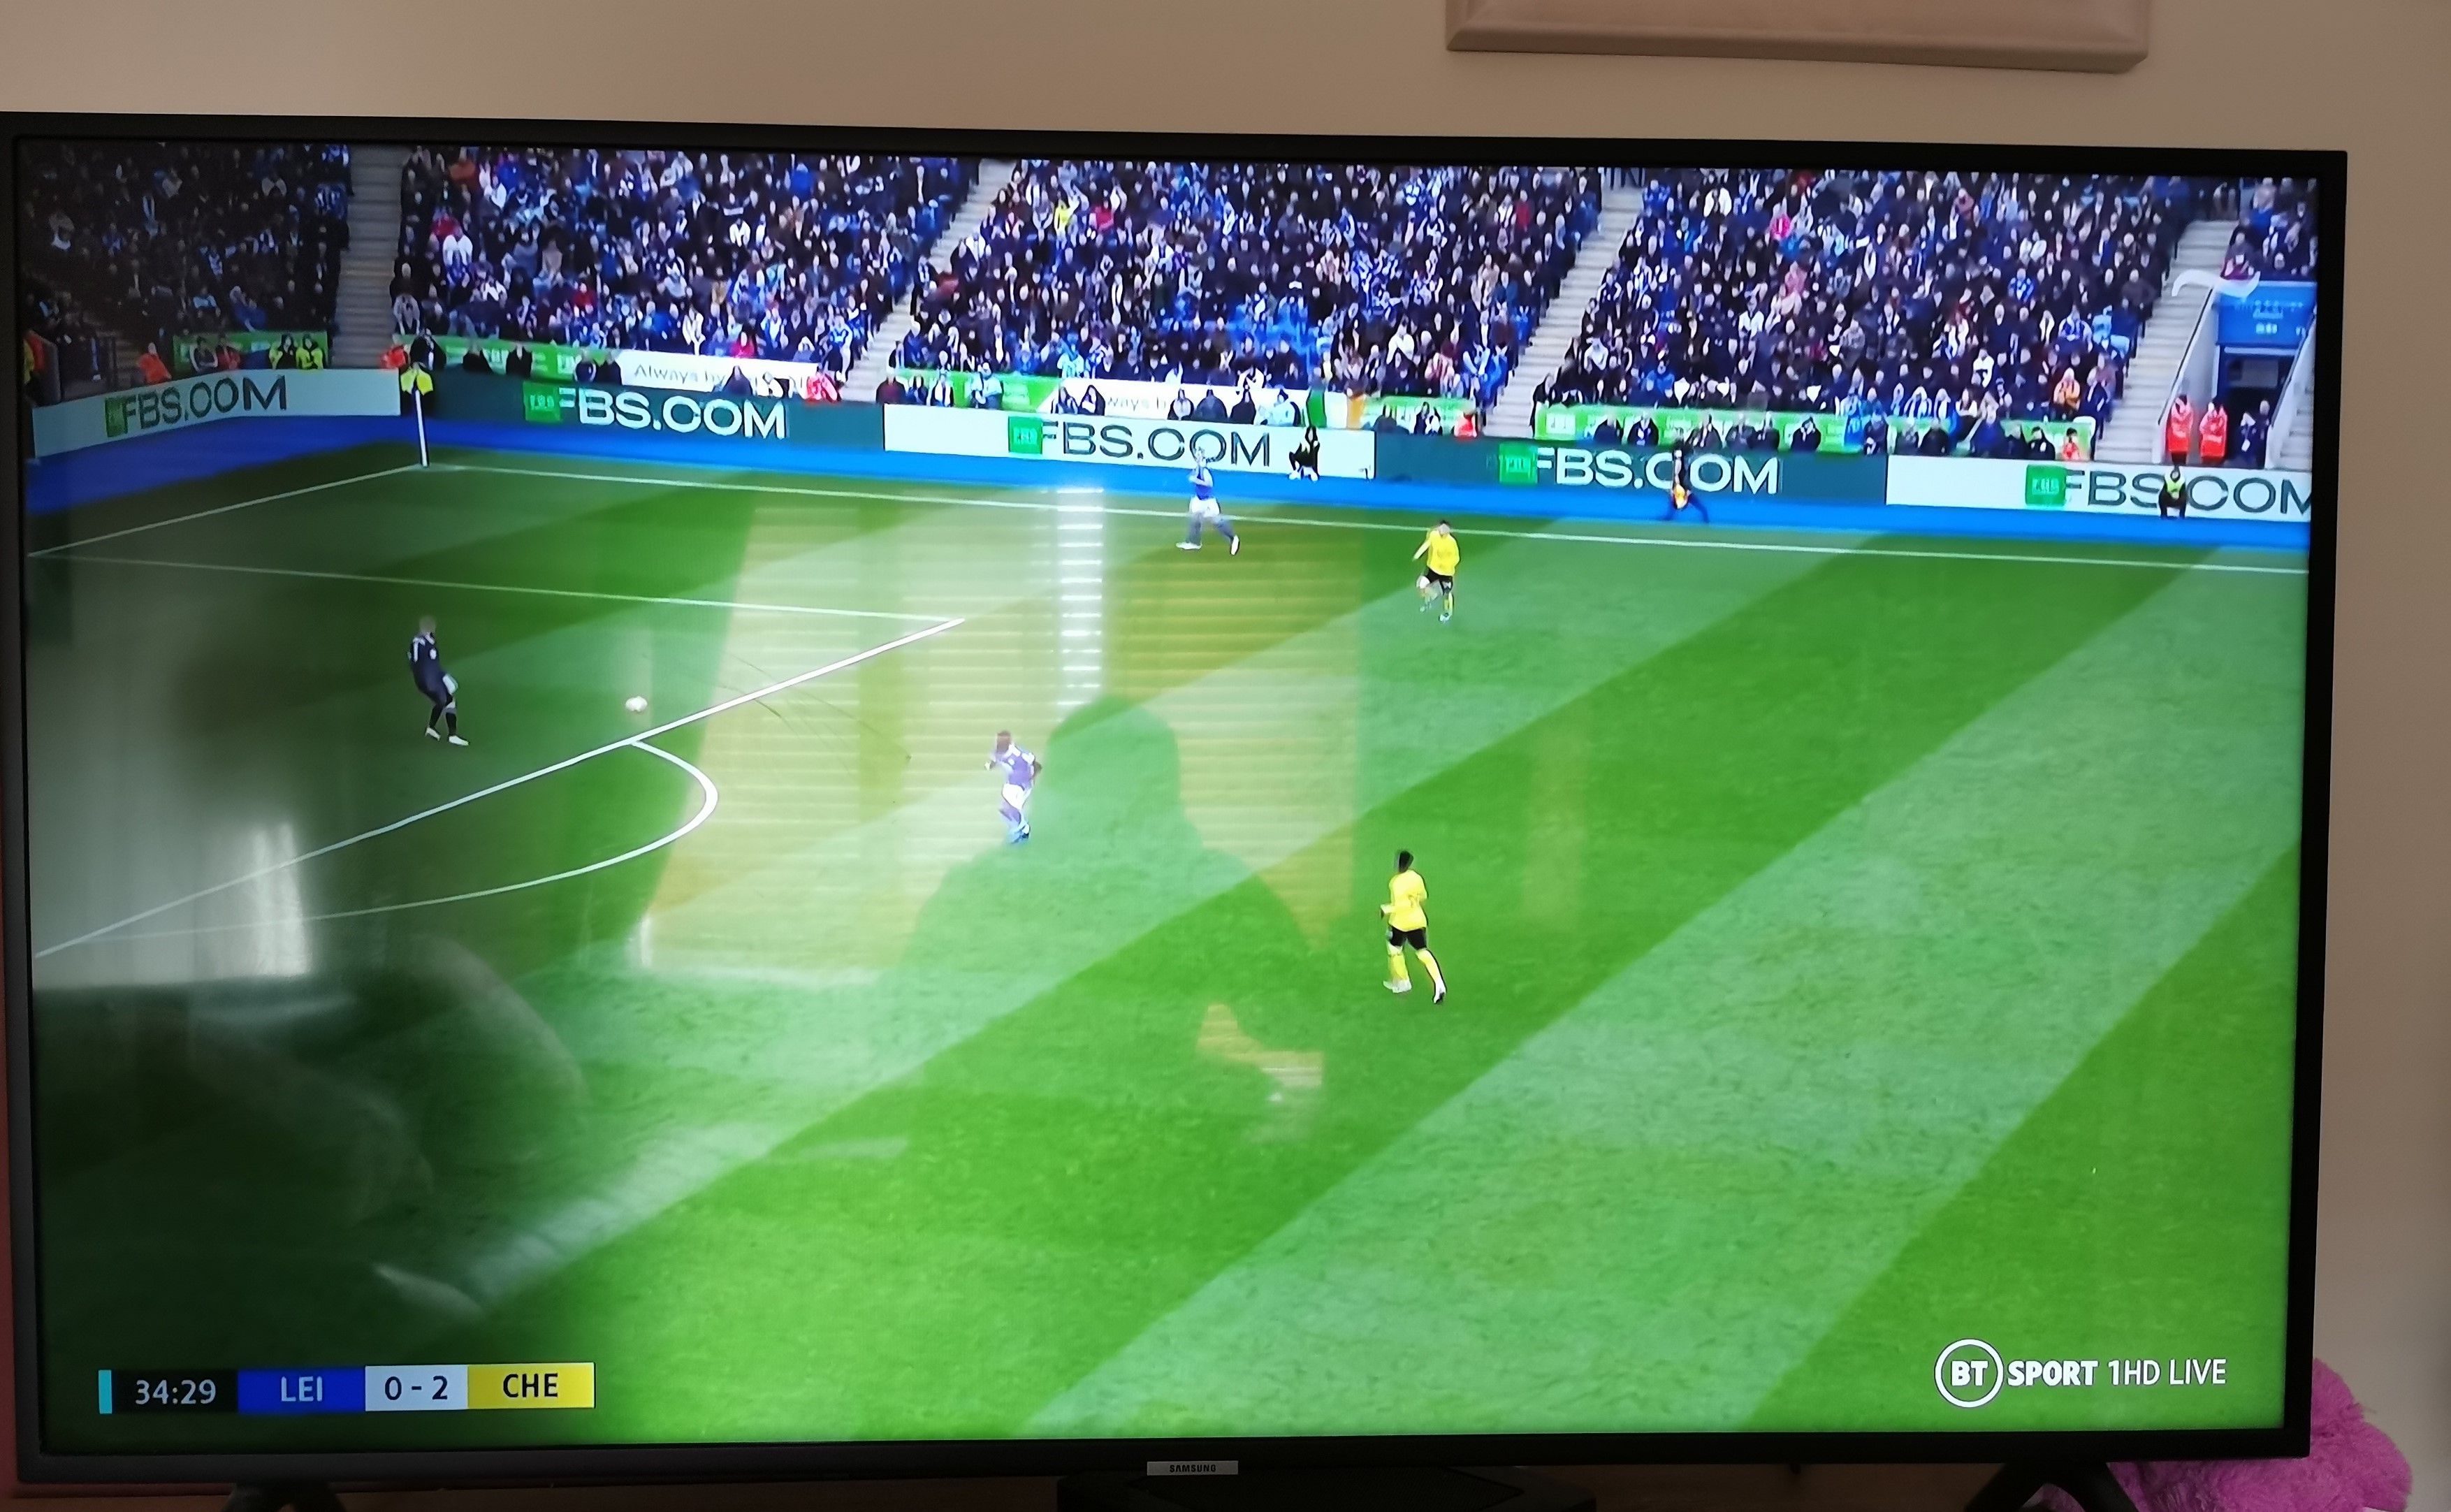 Dark shadow on left hand side of TV screen - Samsung Community